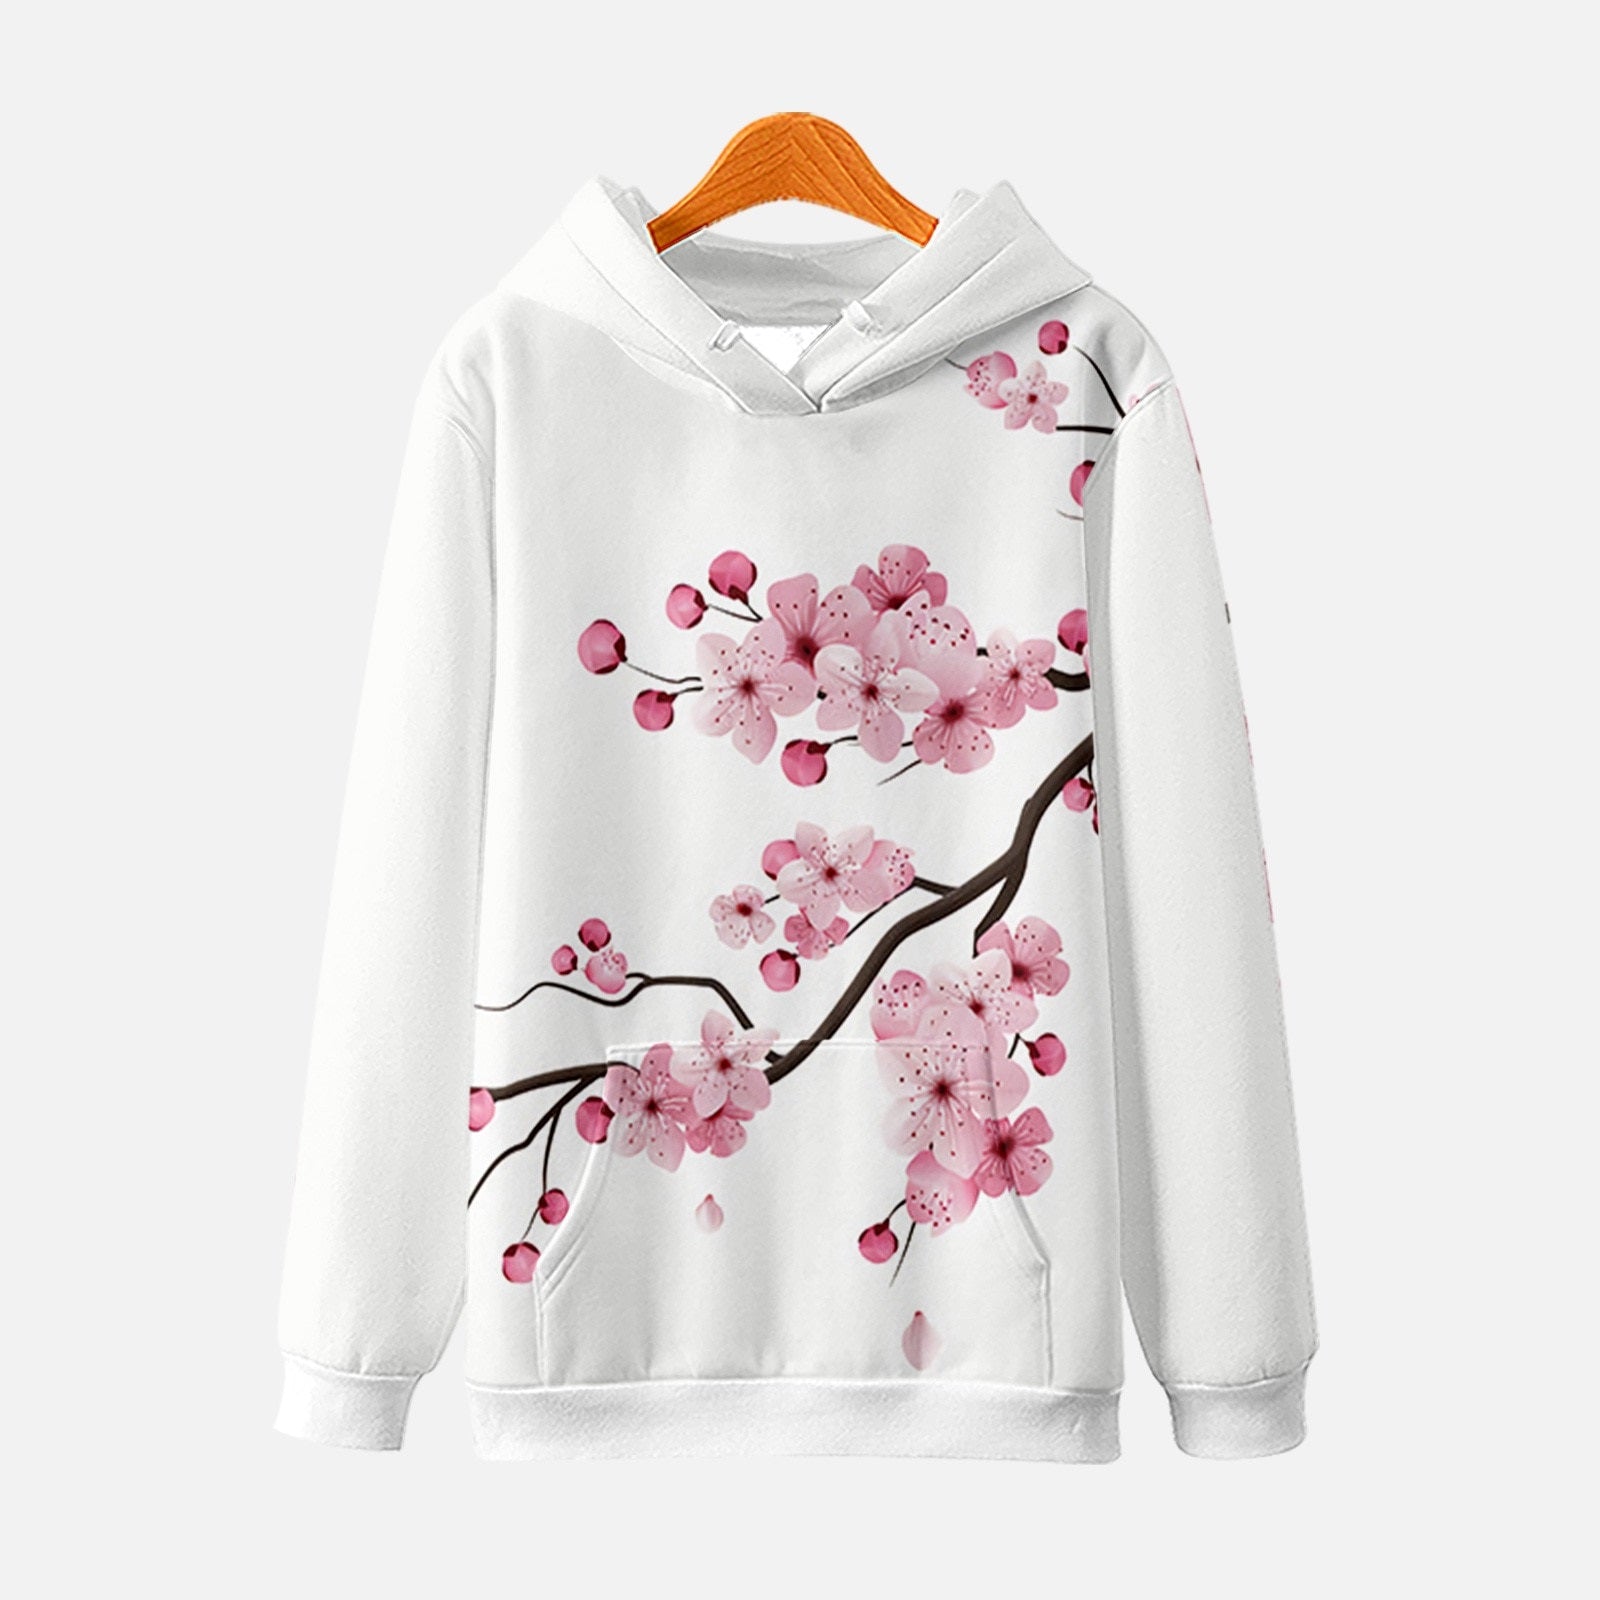 Kawaii White Hoodie With Cherry Blossom Design